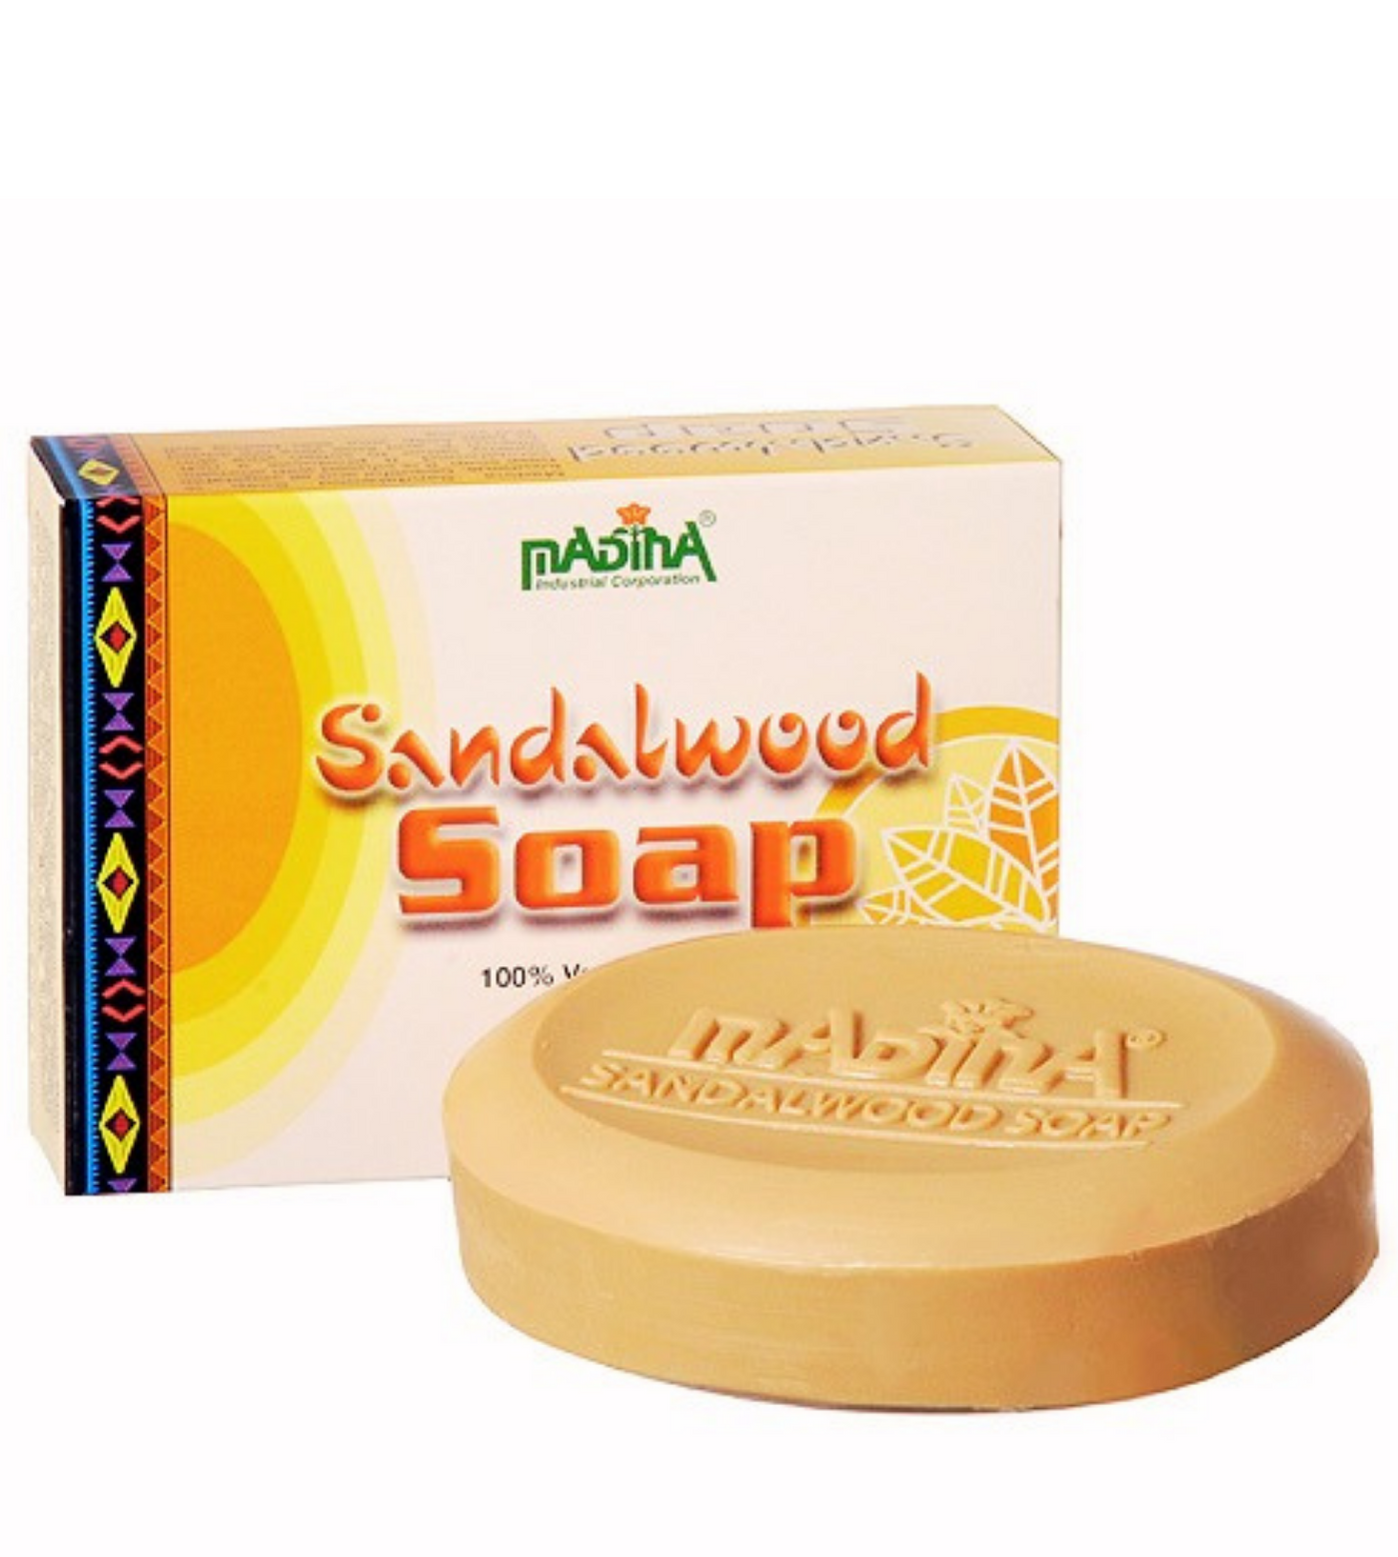 Sandalwood bar soap